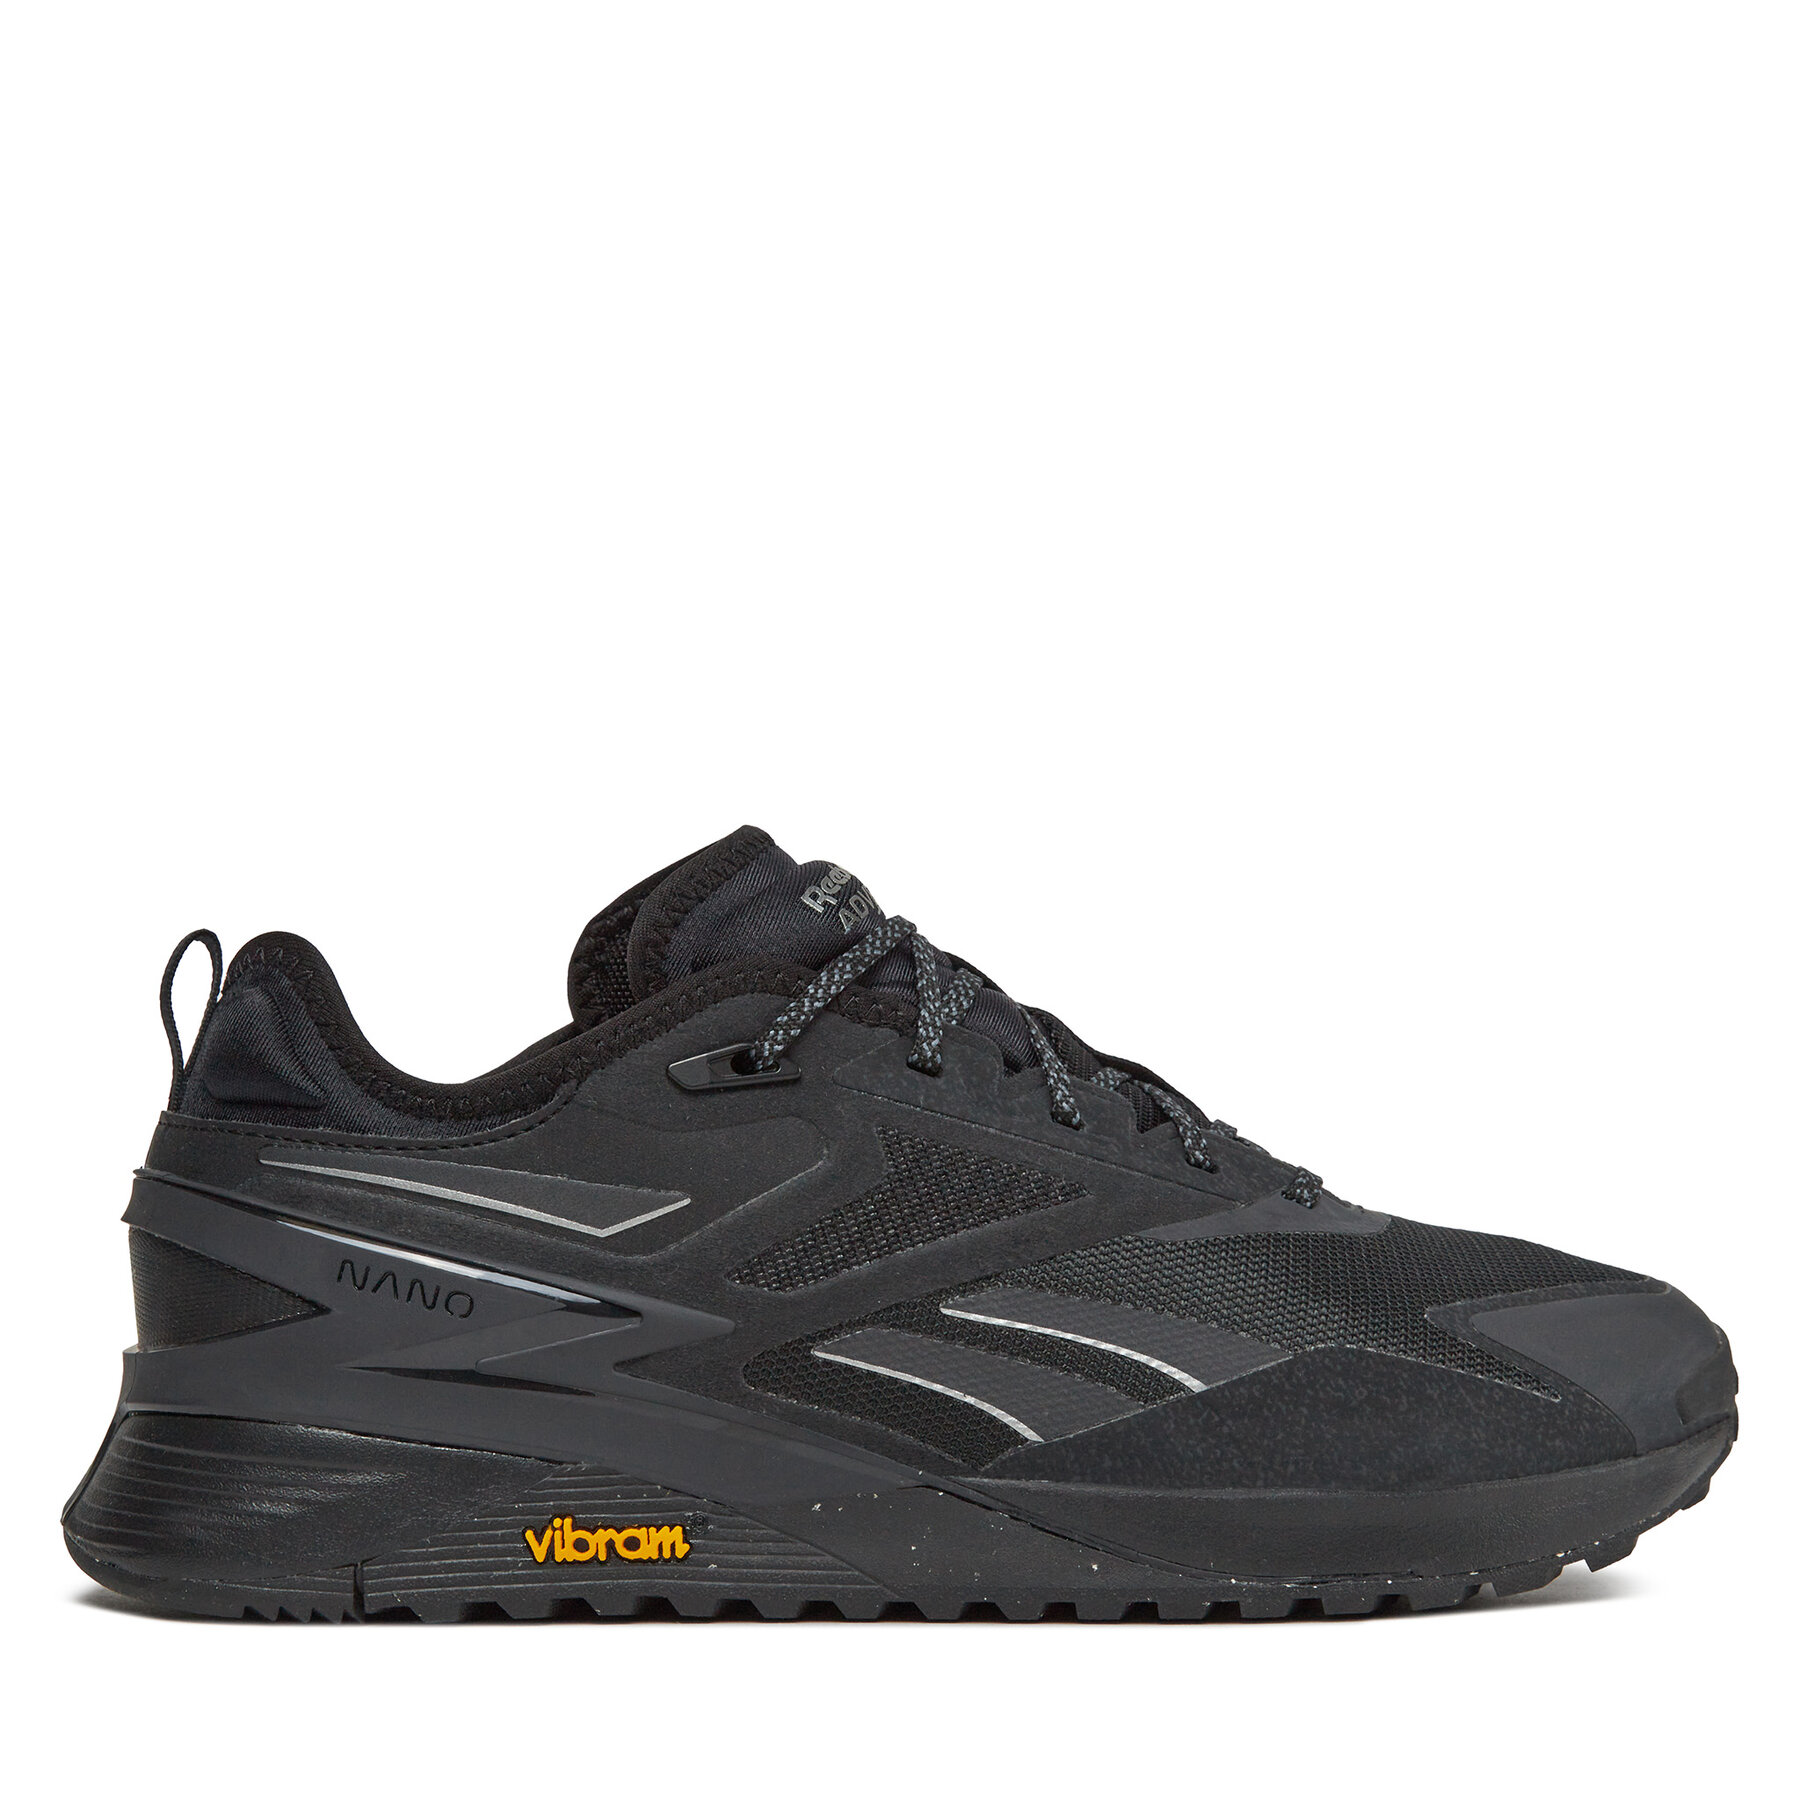 Schuhe Reebok Nano X3 Adventure IE4457 Core Black/Pure Grey 7/Pewter von Reebok